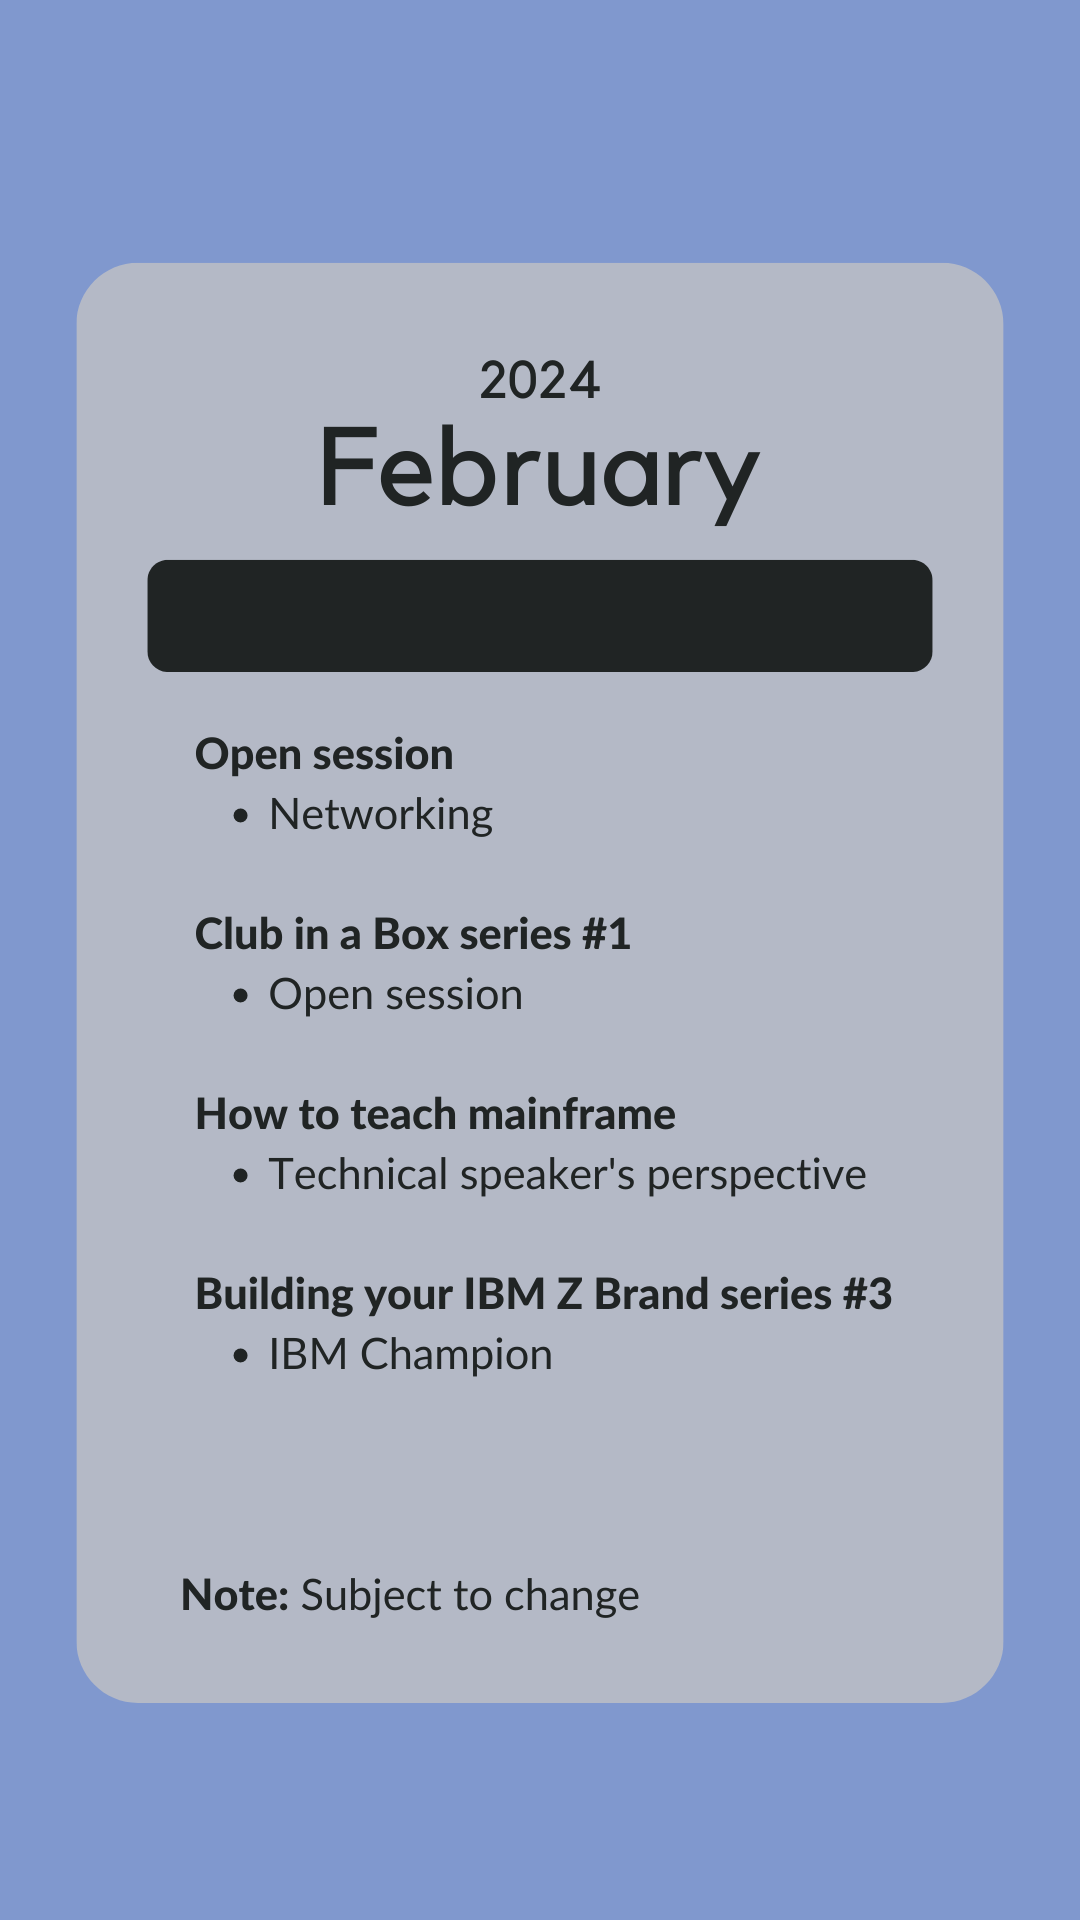 YBY_IBM_Z_Calendar_2024_February.png